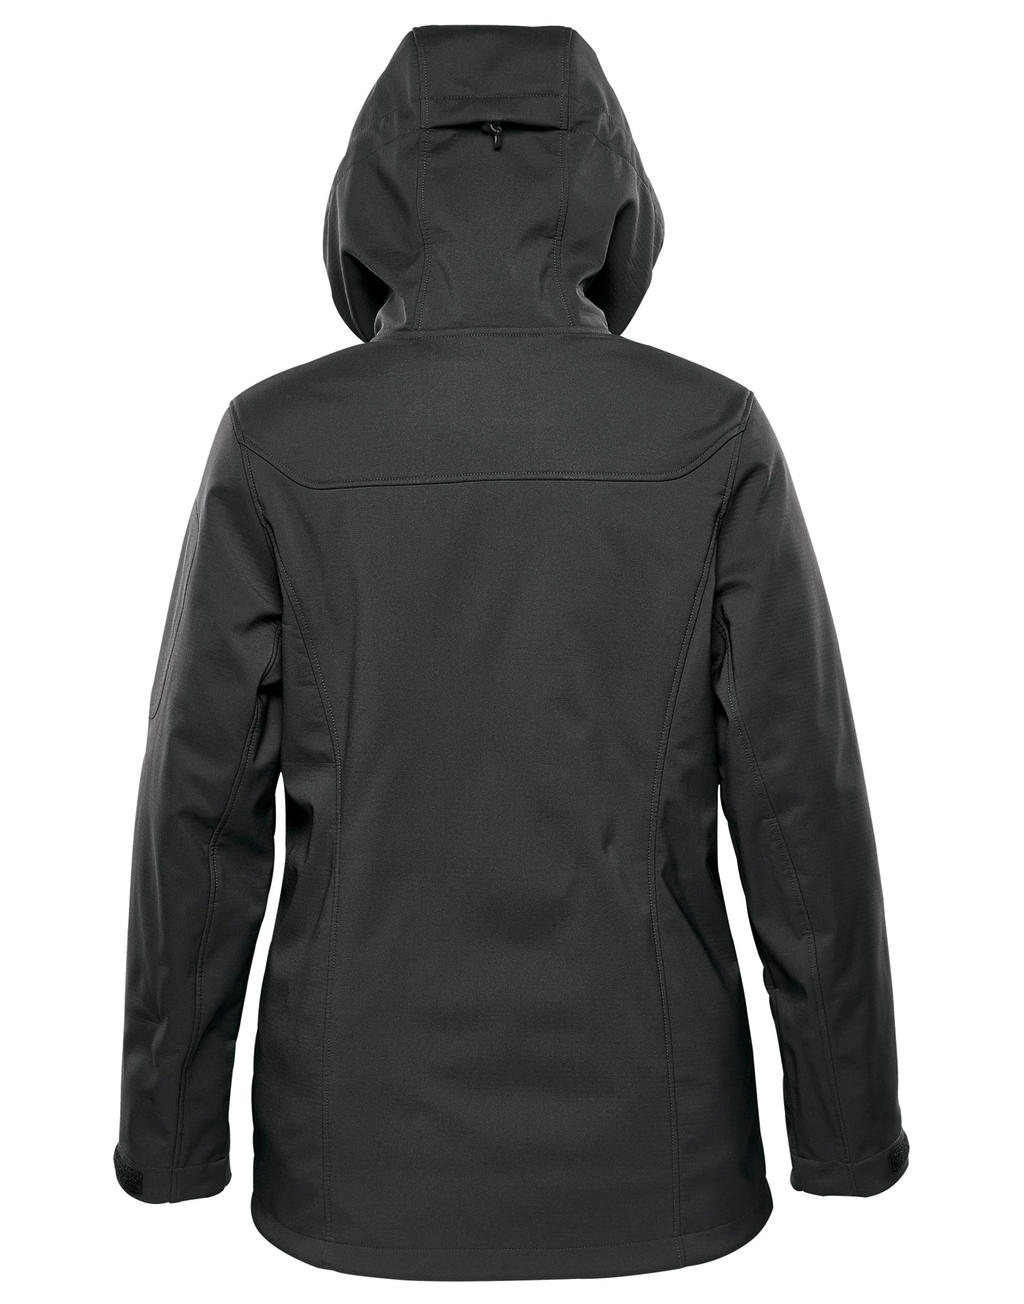  Womens Epsilon System Jacket in Farbe Black